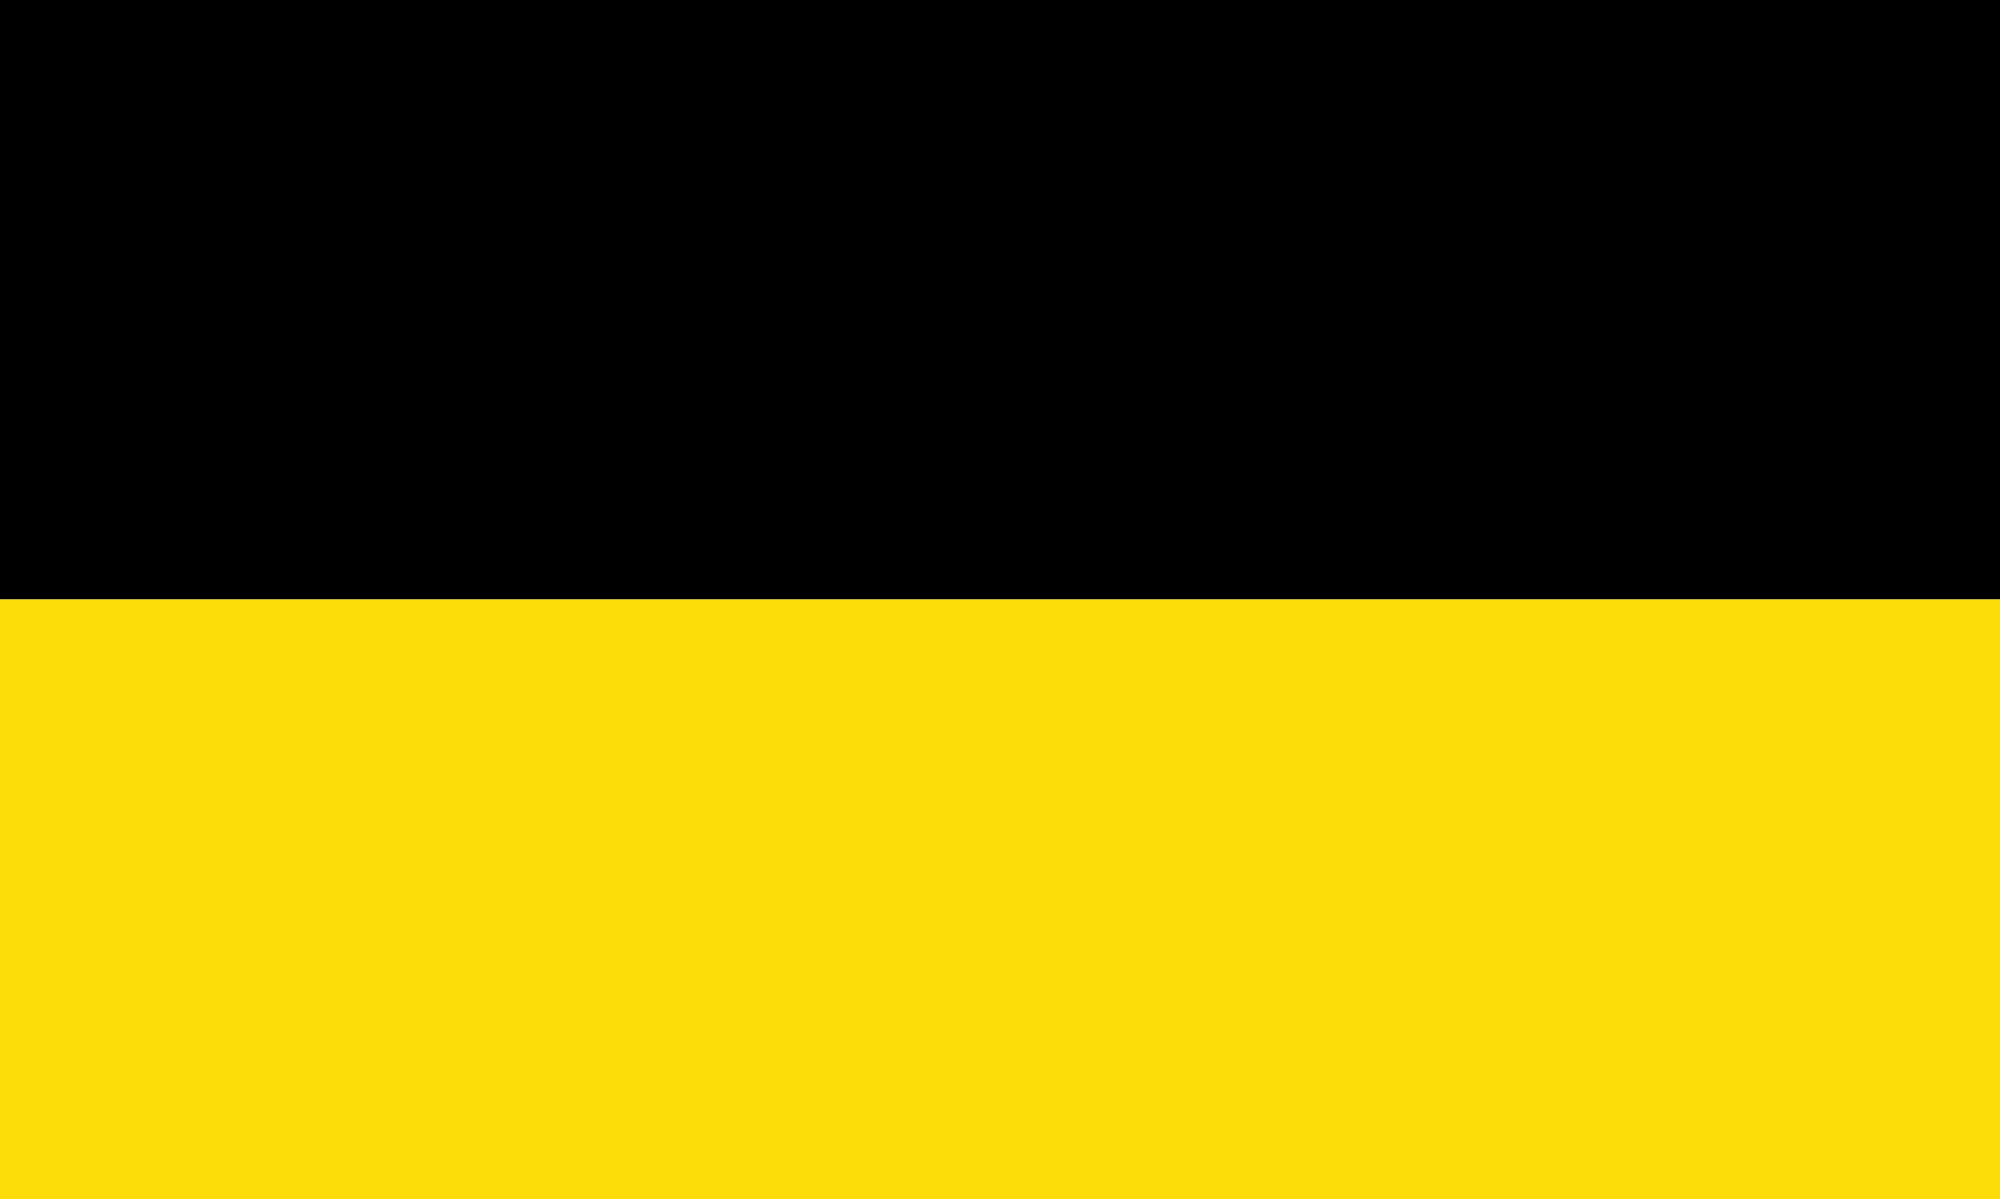 File:Flag black white 5x3.svg - Wikimedia Commons